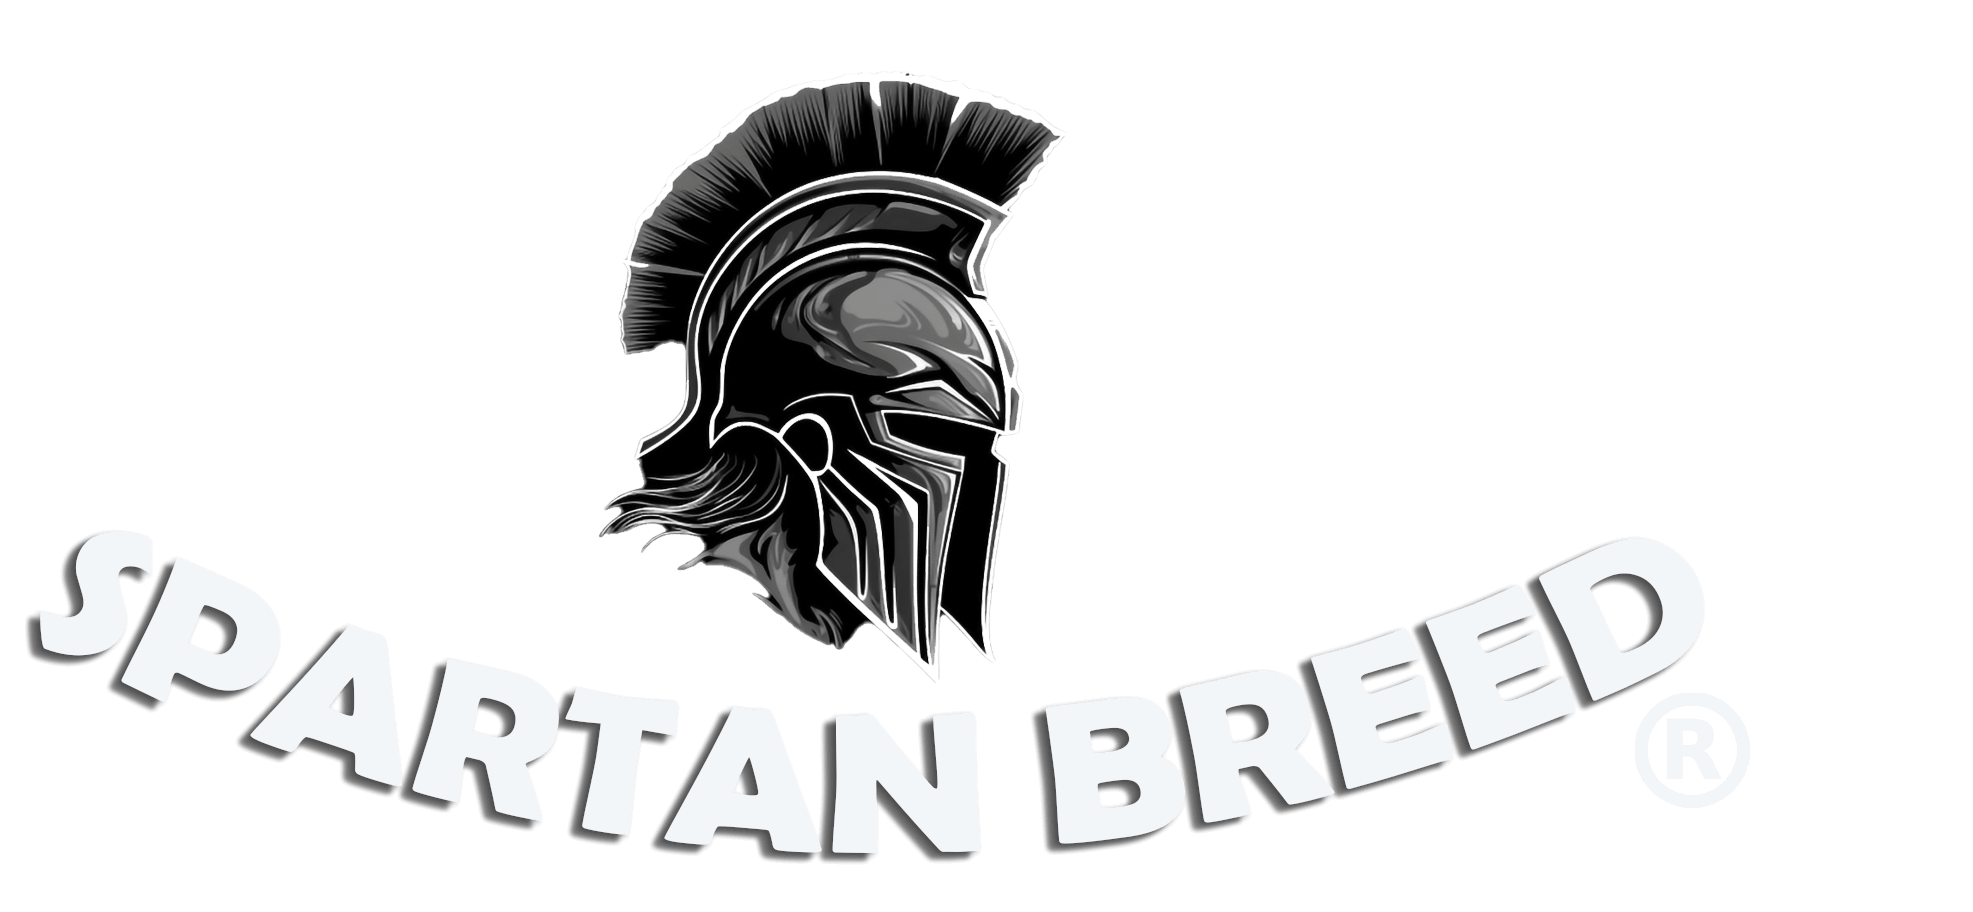 www.spartanbreed.com